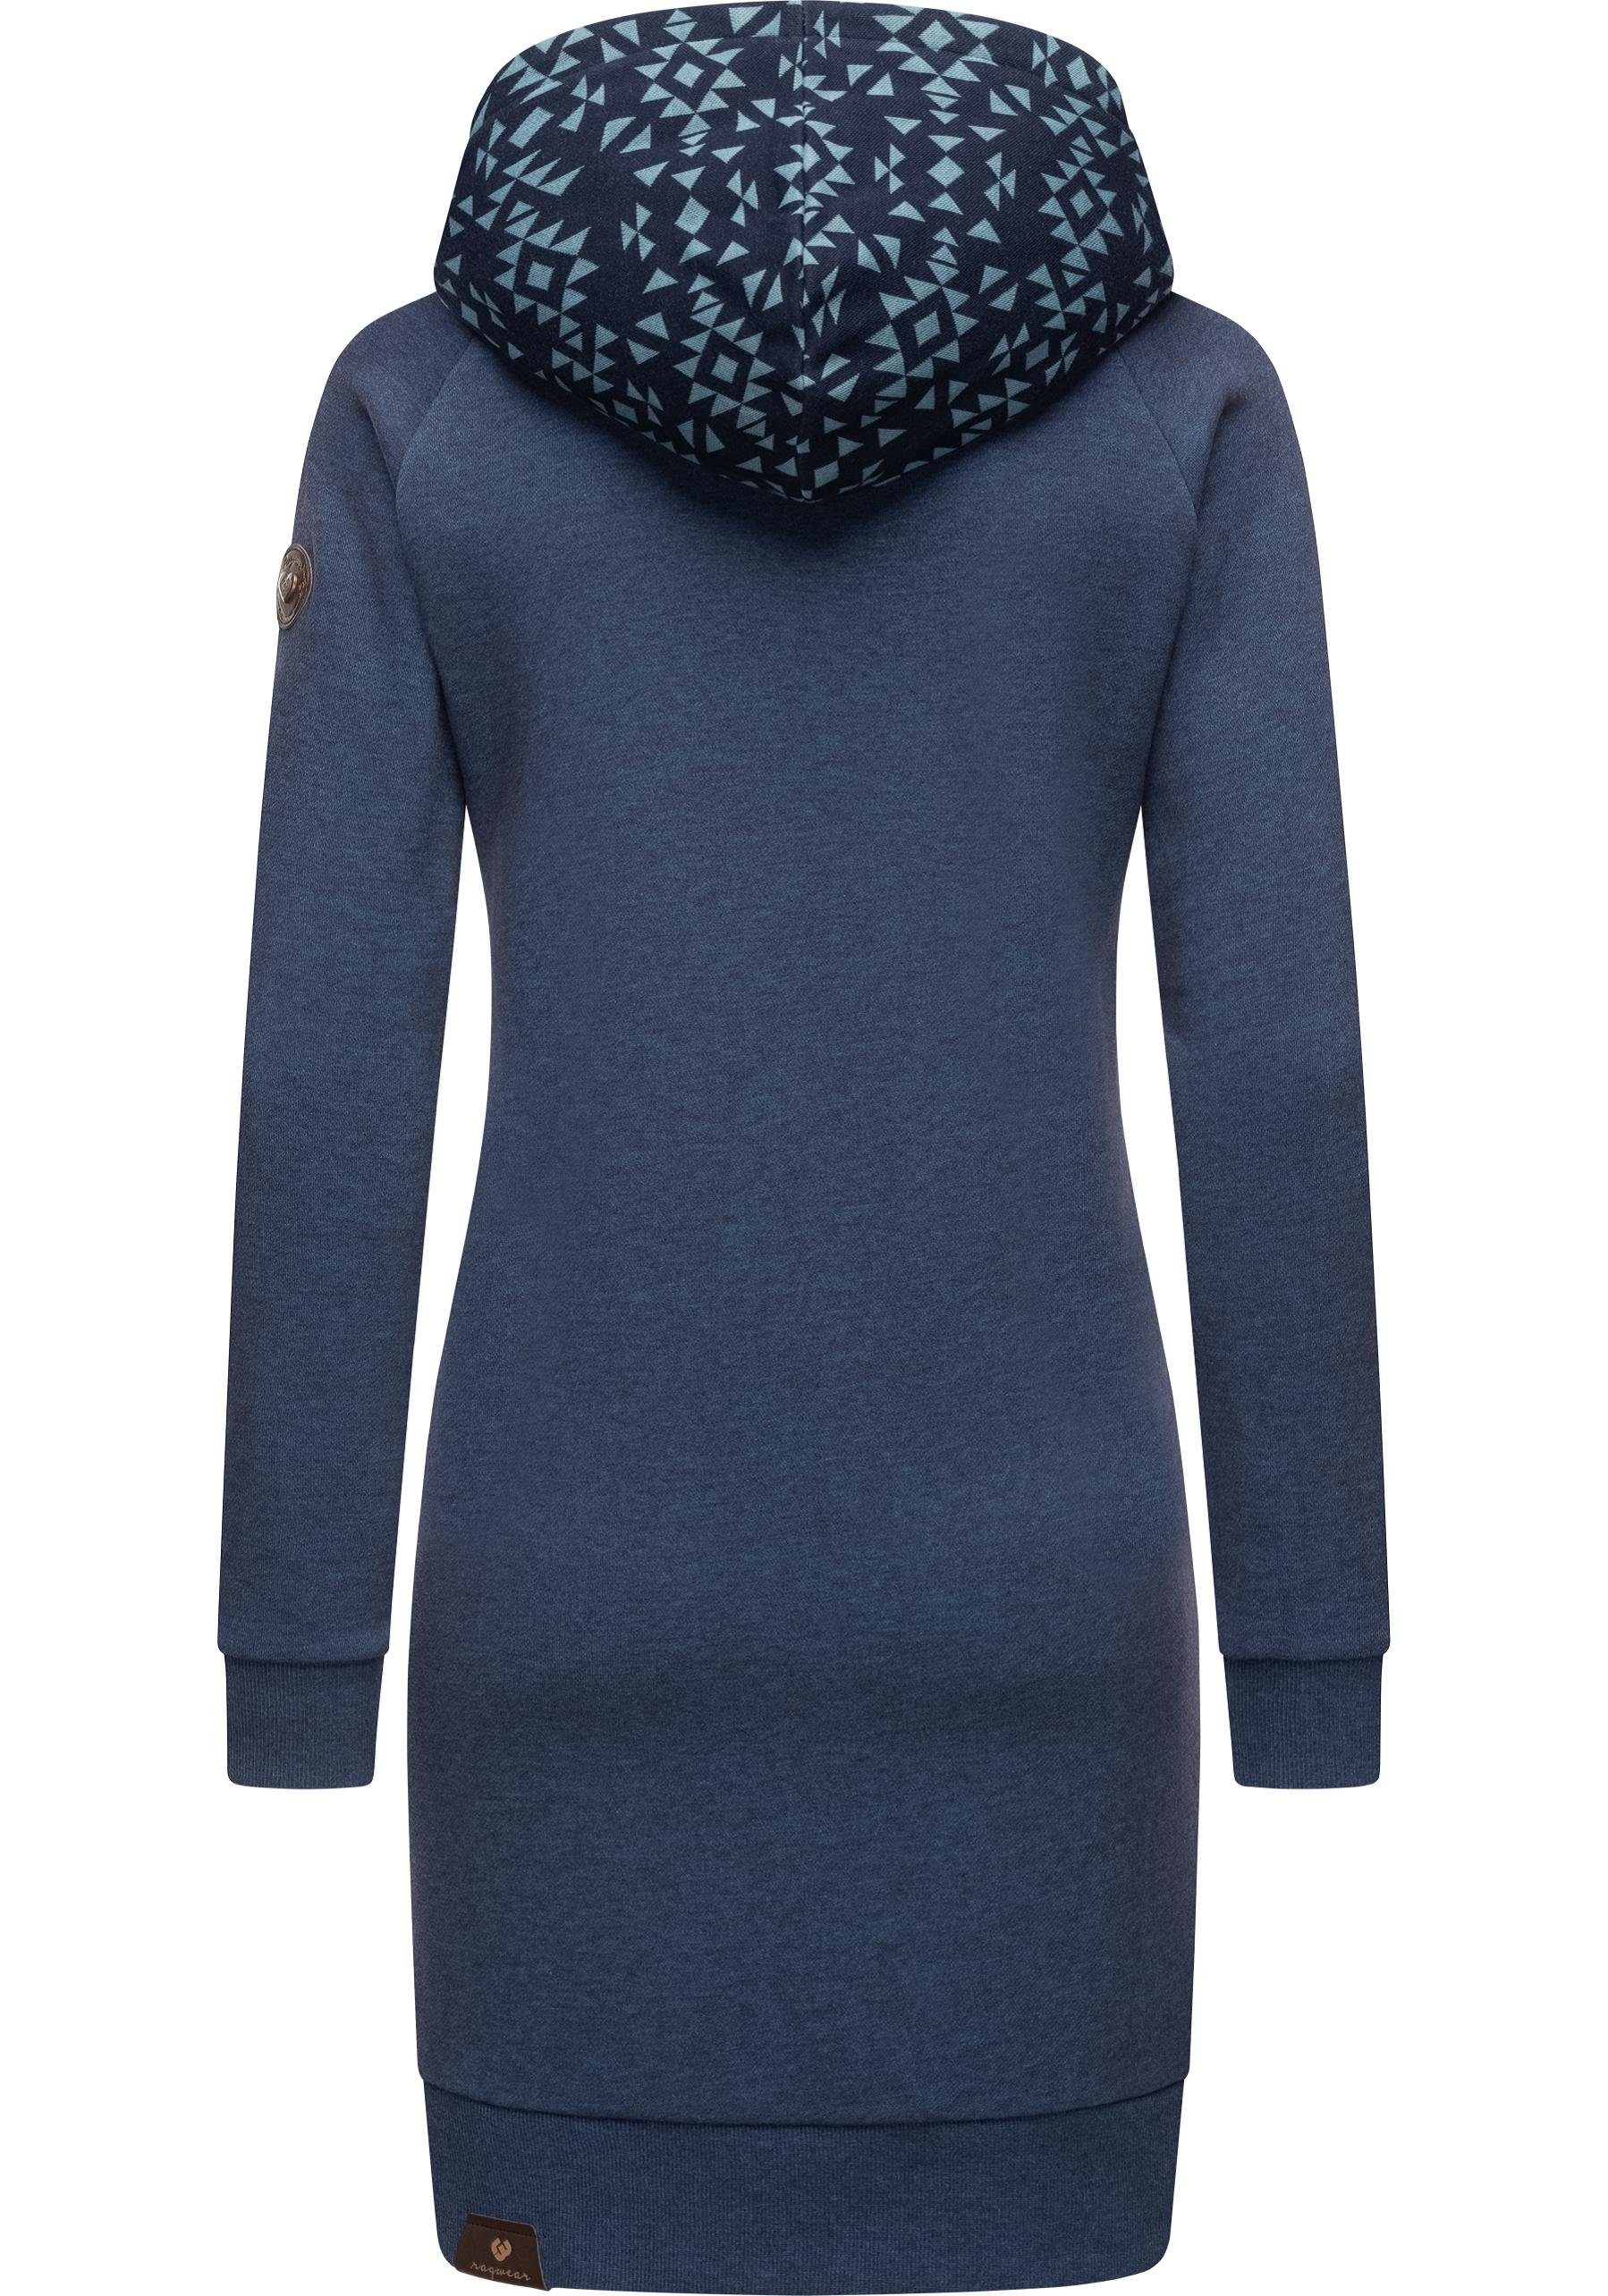 Ragwear Sweatkleid Bessi Langärmliges Winterkleid mit angesagtem Printmuster-Kapuze, Tolles Ragwear Baumwoll Kleid Alloverprint mit von